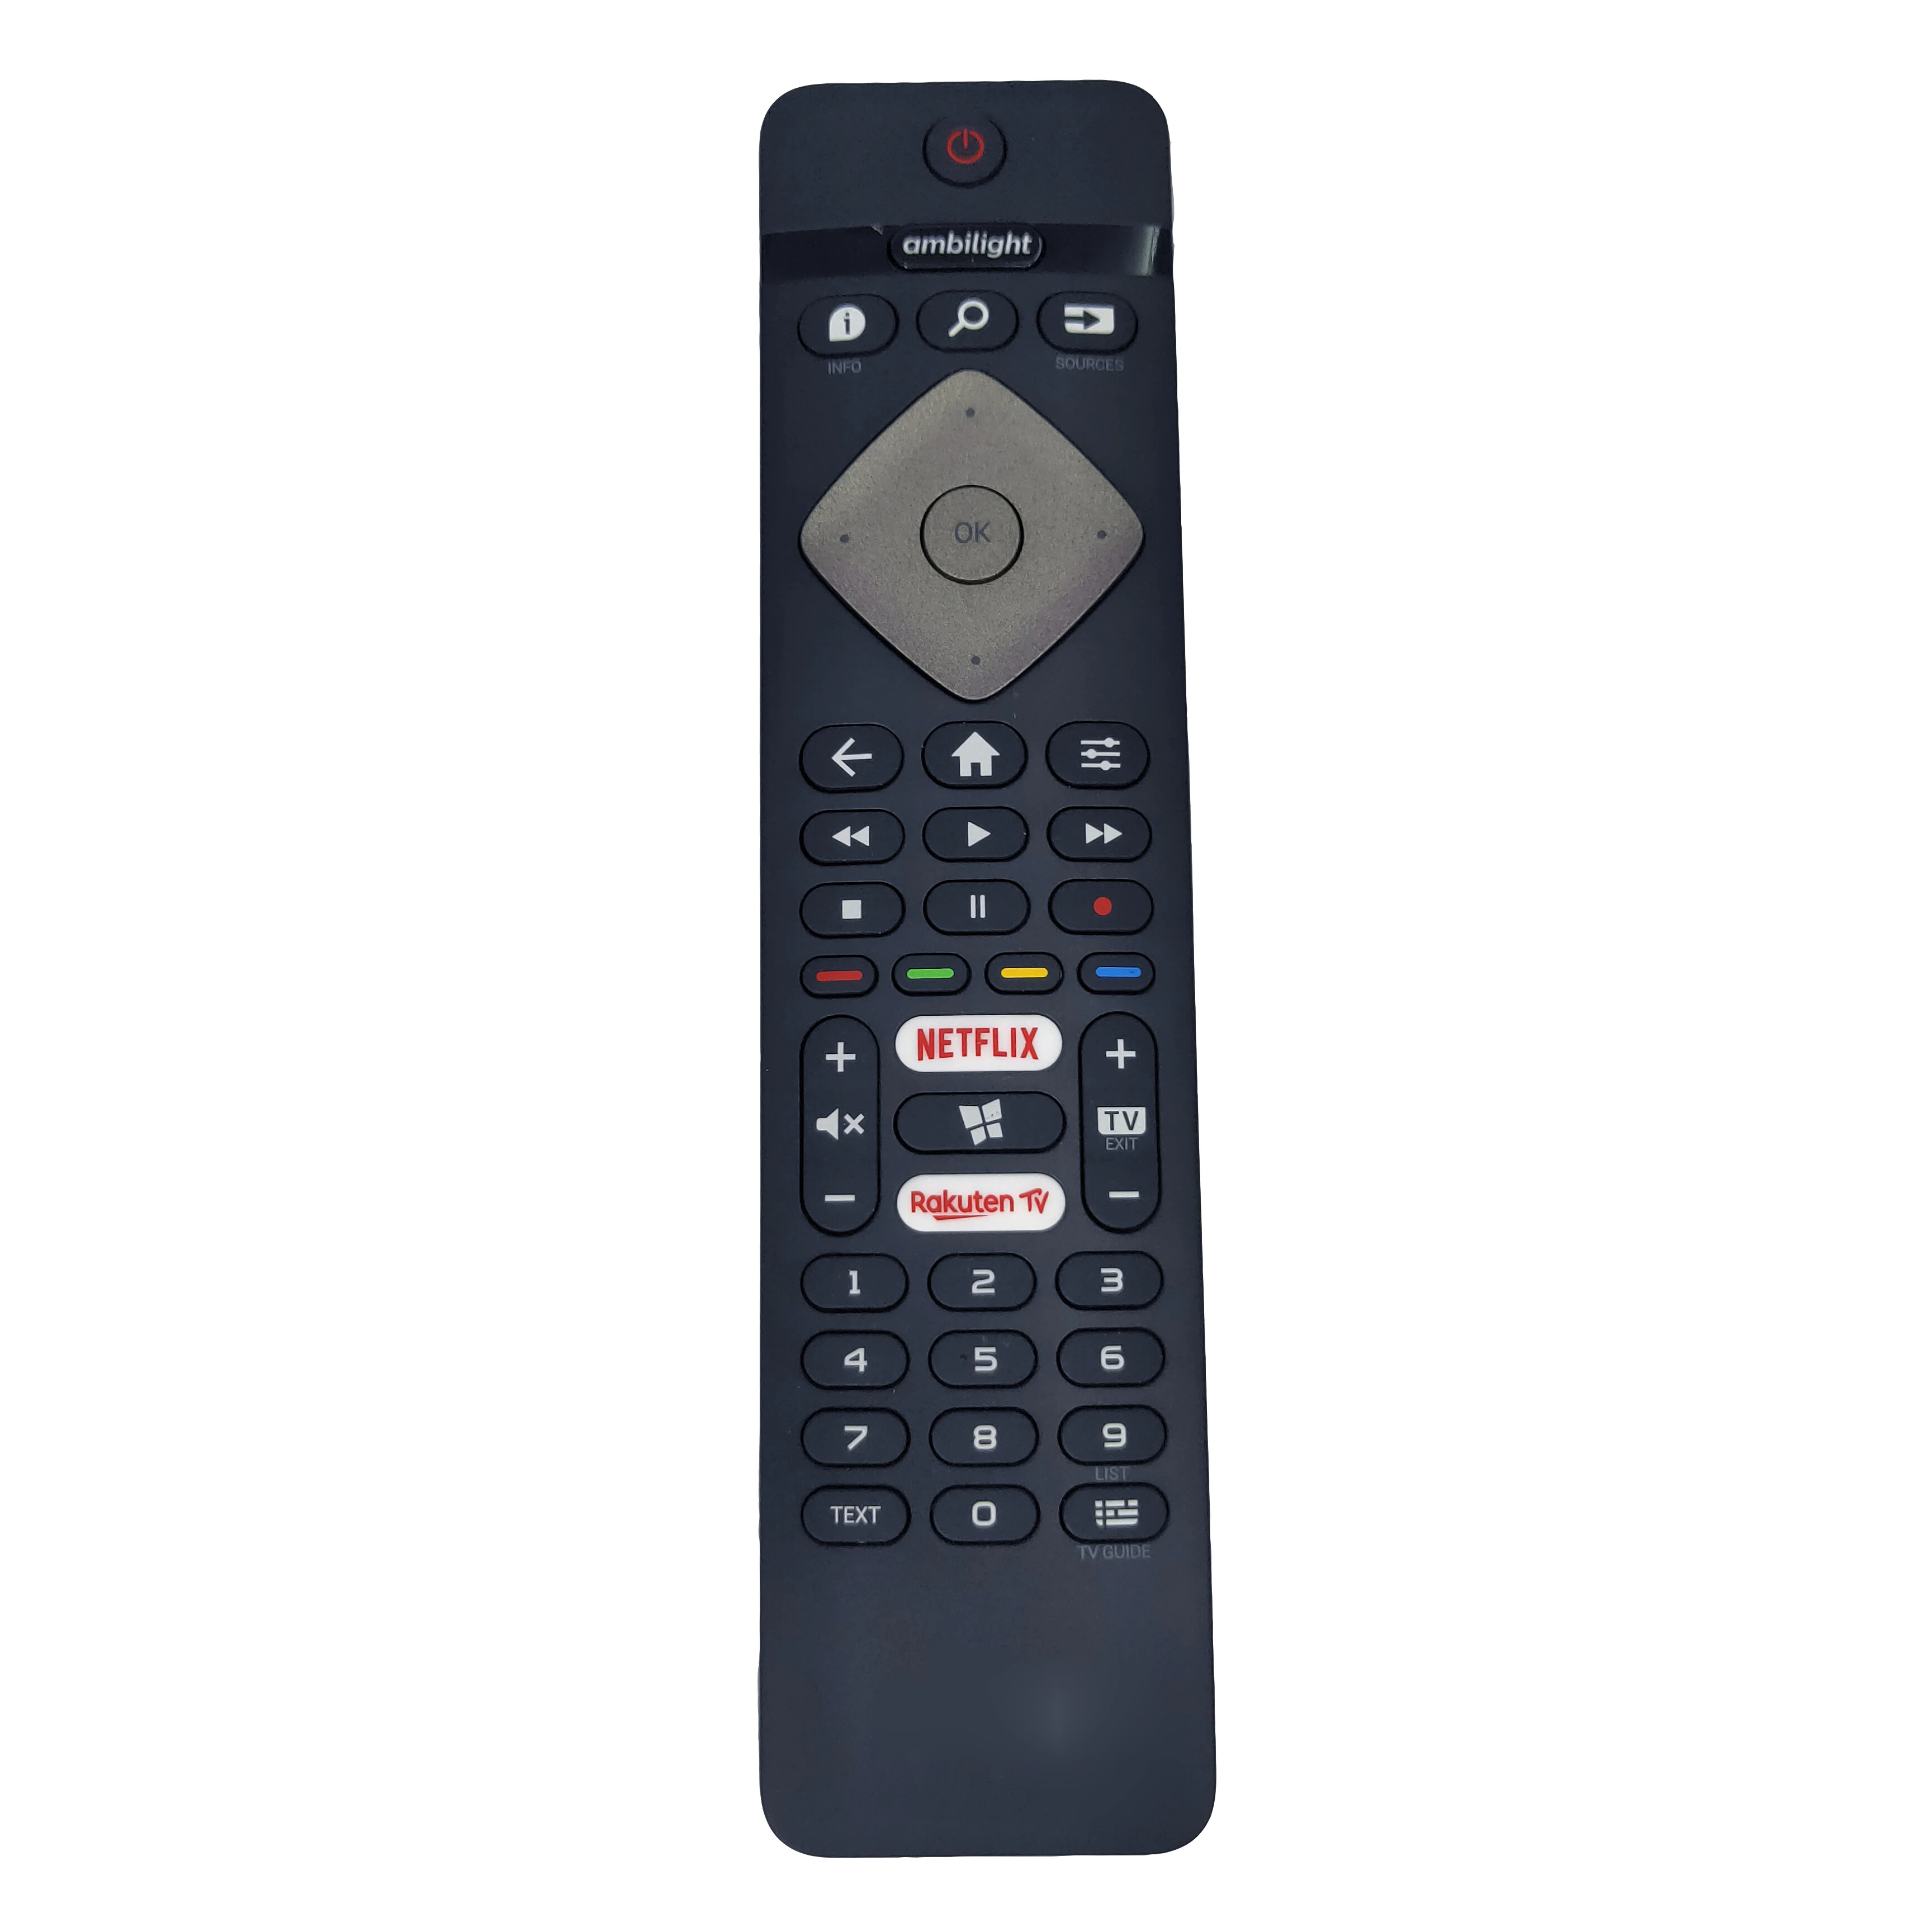 

New Original 398GR10BEPHN0017BC For Philips Smart TV Remote control BRC0884402/01 BRC0884301/01 996599001251 YKF456-A001